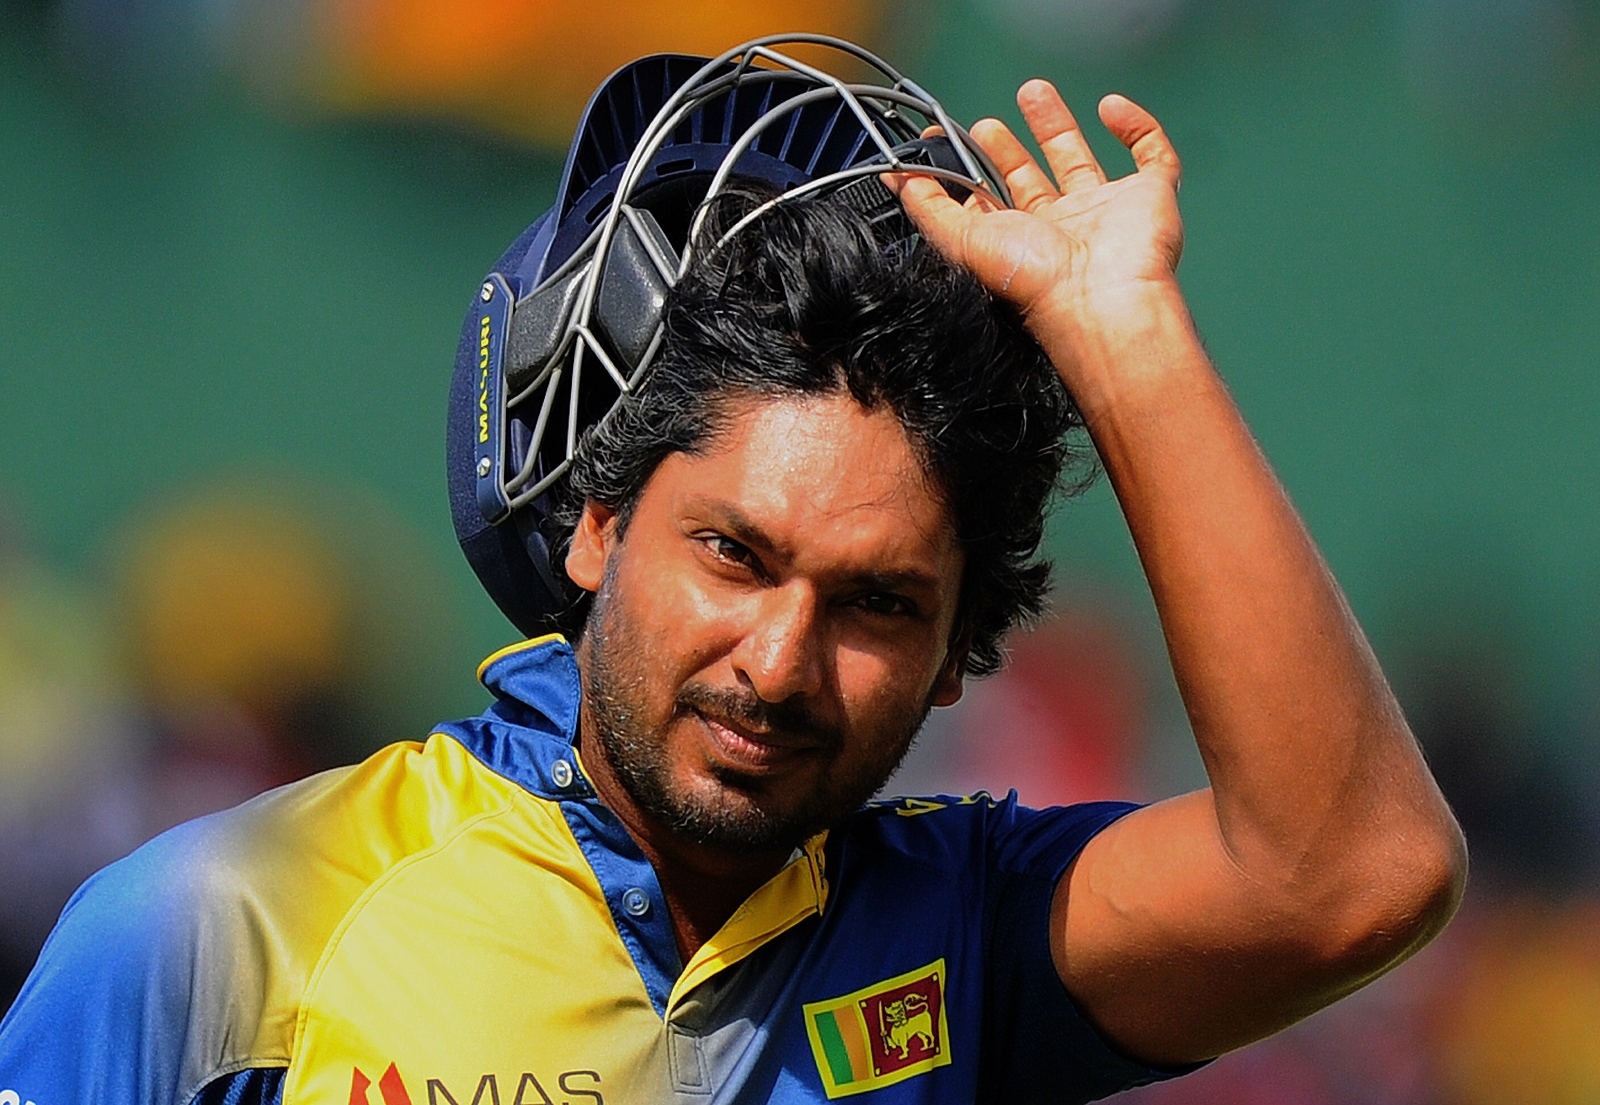 Cricket World Cup 2015 player to watch: Kumar Sangakkara